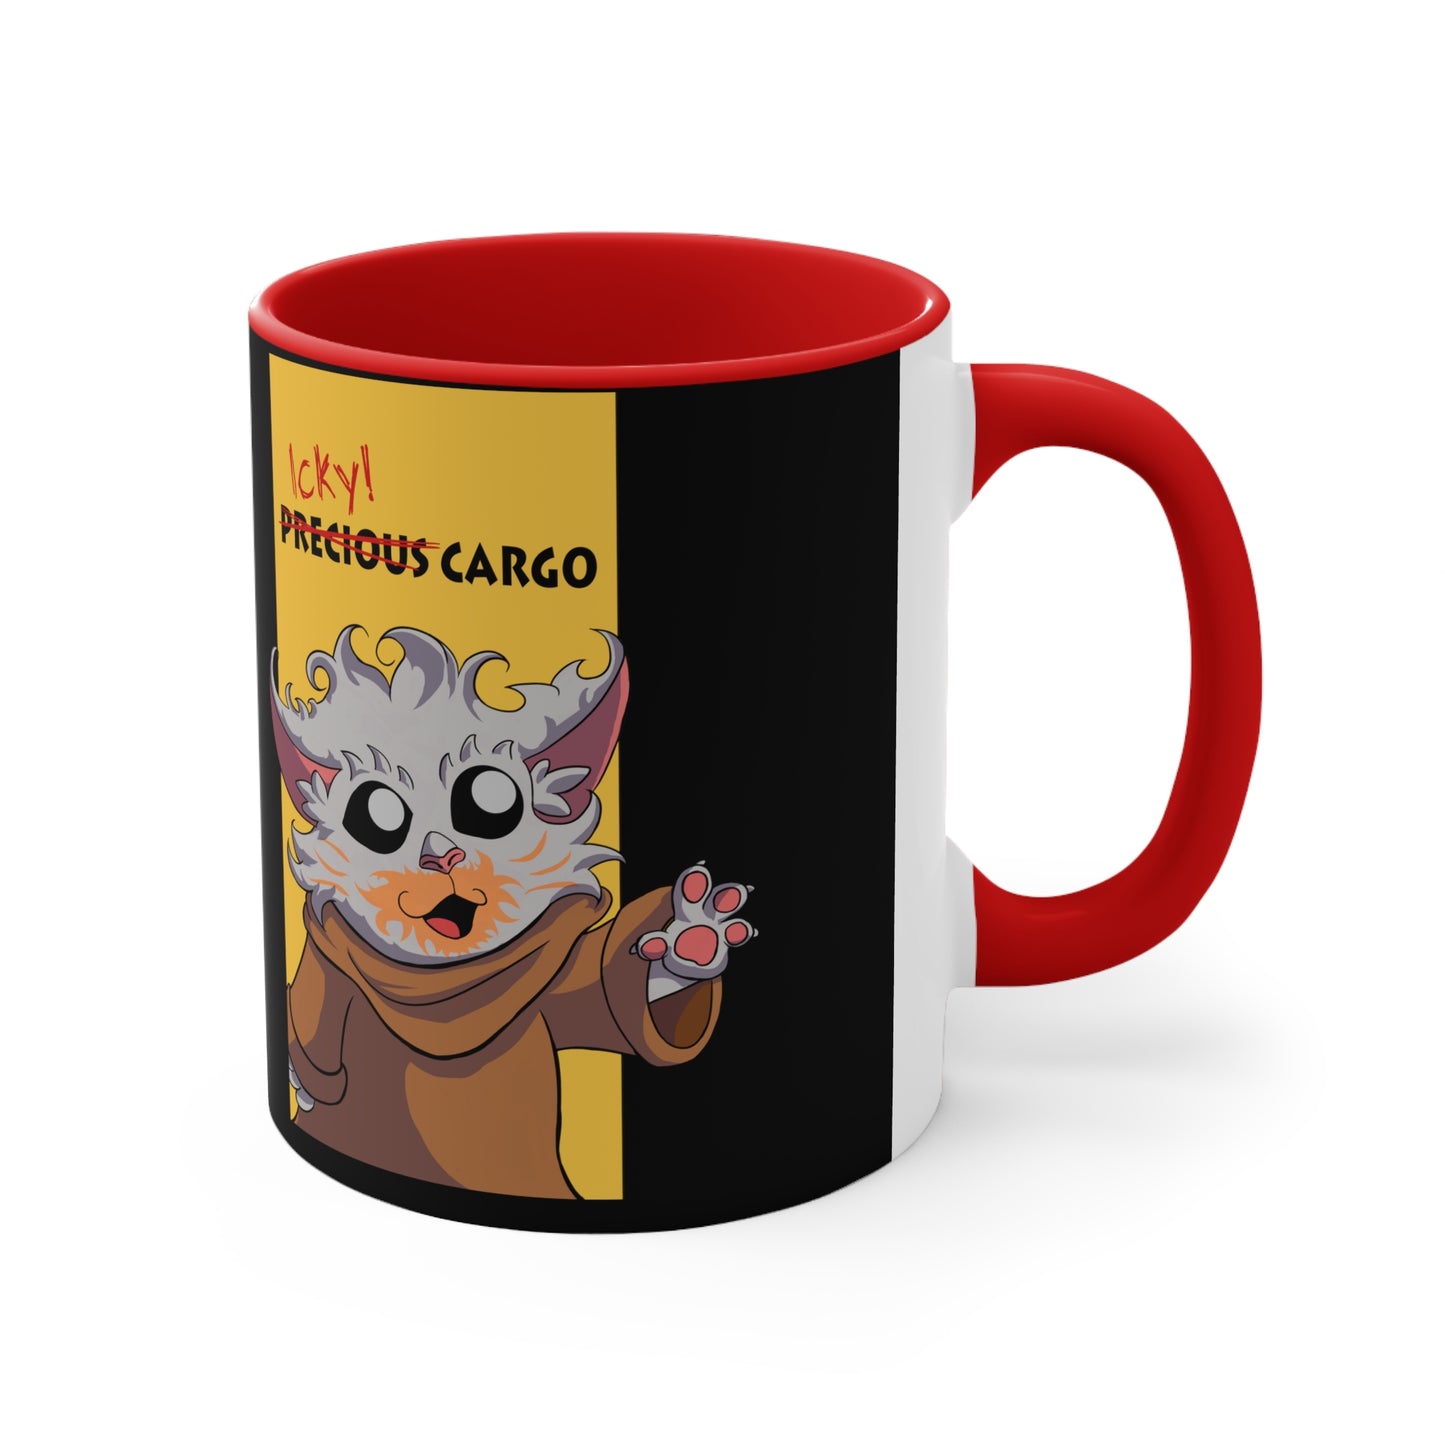 Icky Cargo Mug 11oz - Wisp Campaign